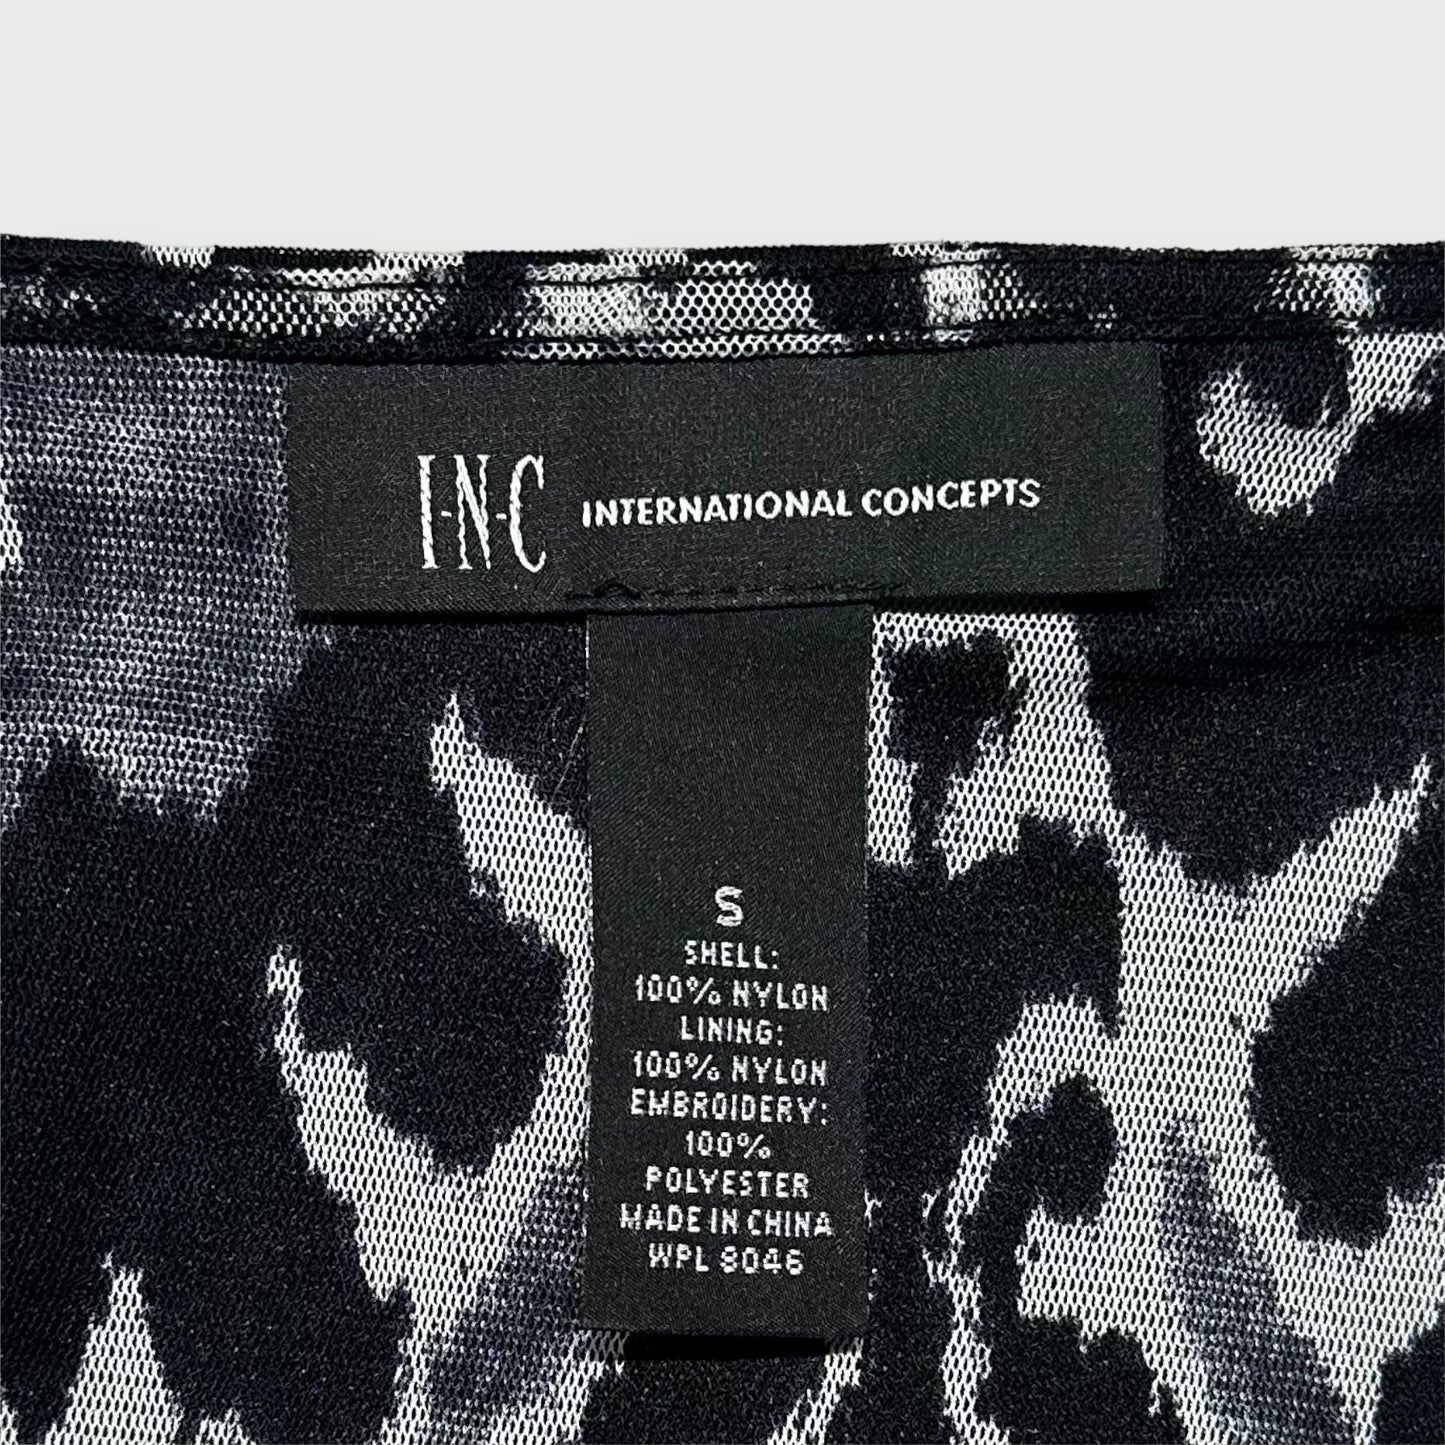 "I.N.C" Flower embroidery pattern cutsew